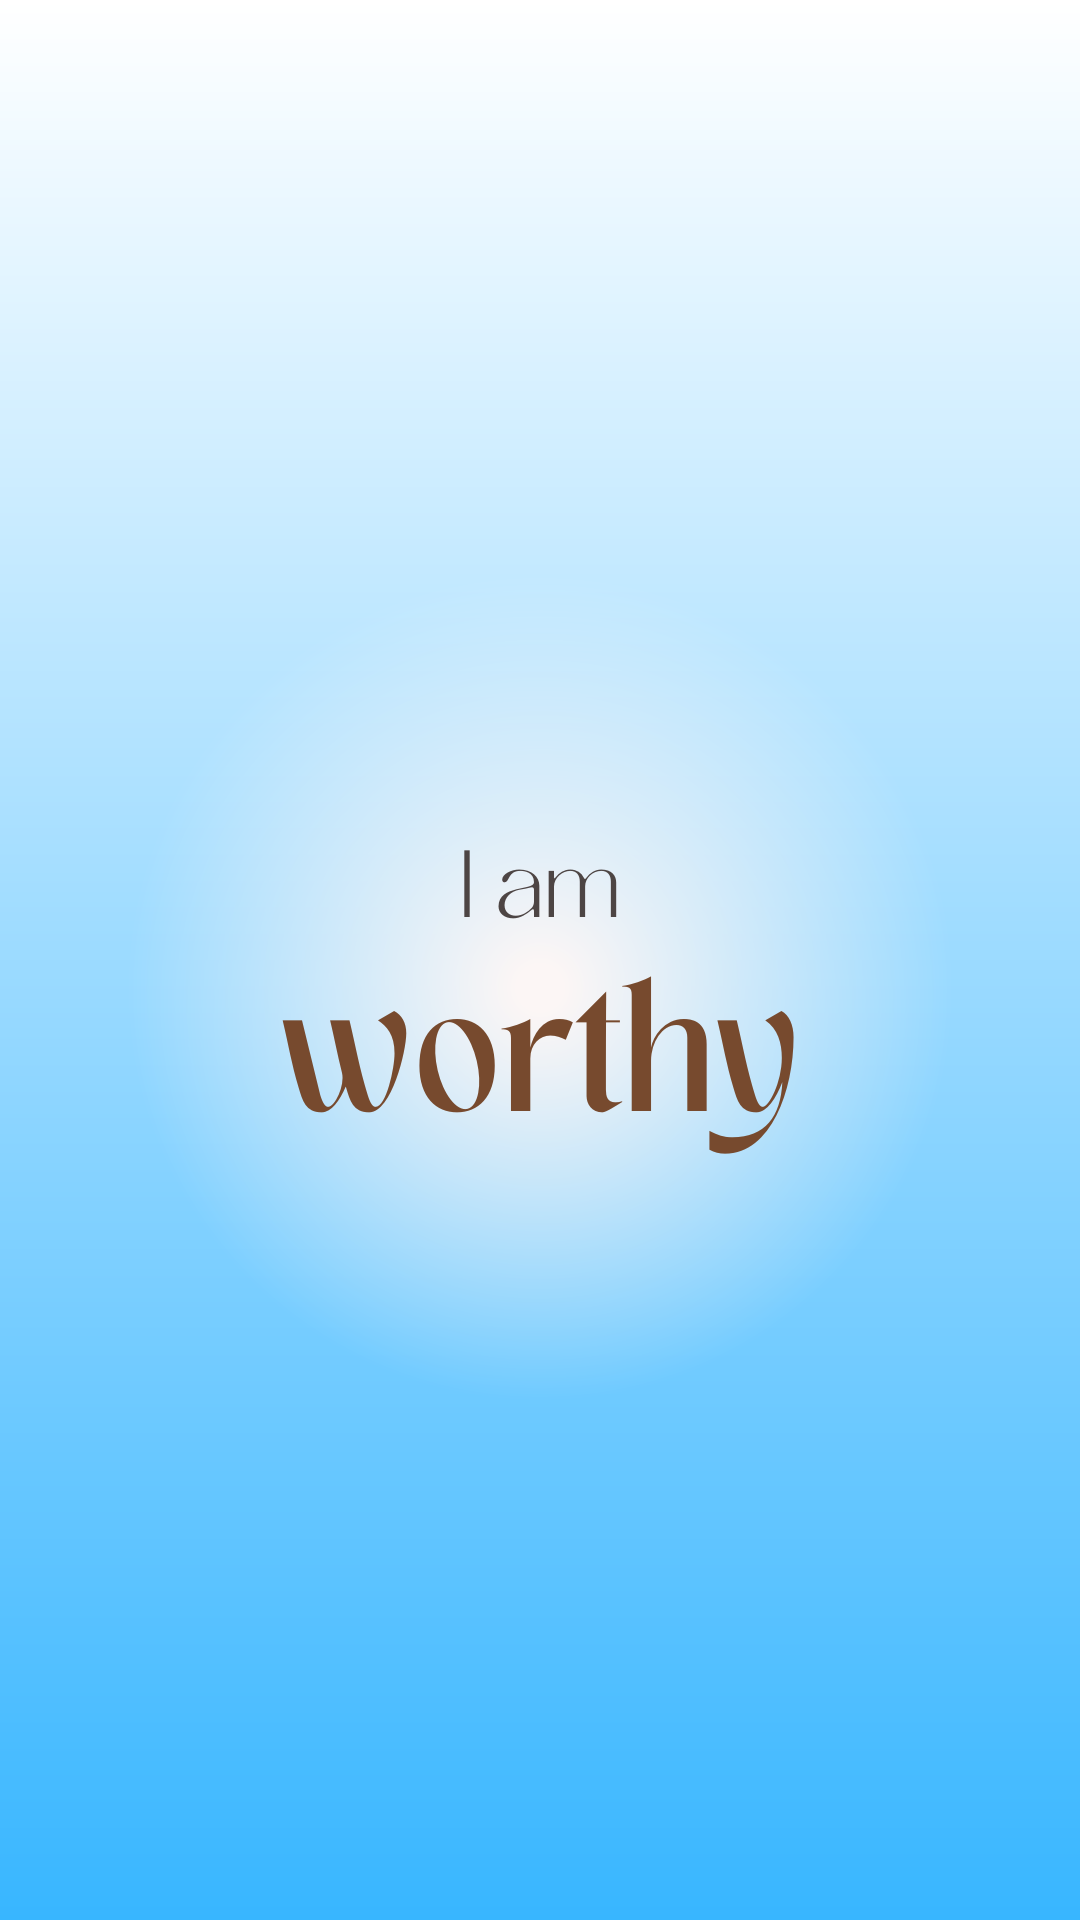 i am worthy positive affirmation